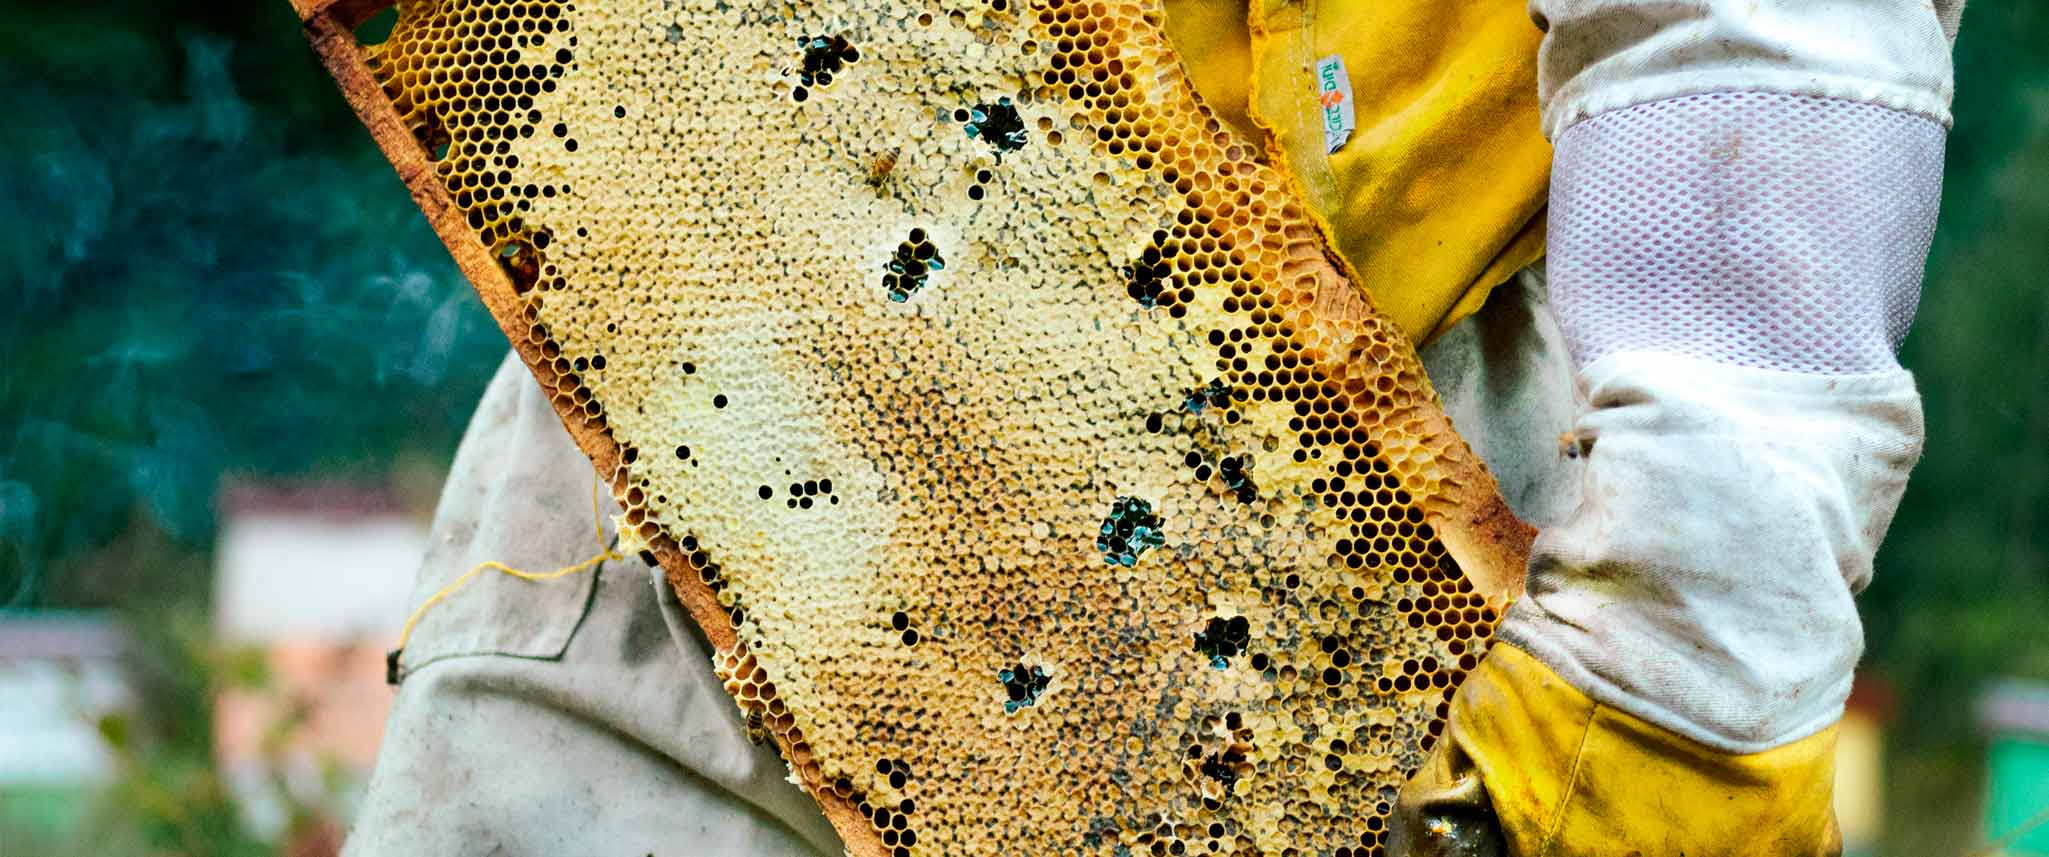 Productores de miel Reina Madre